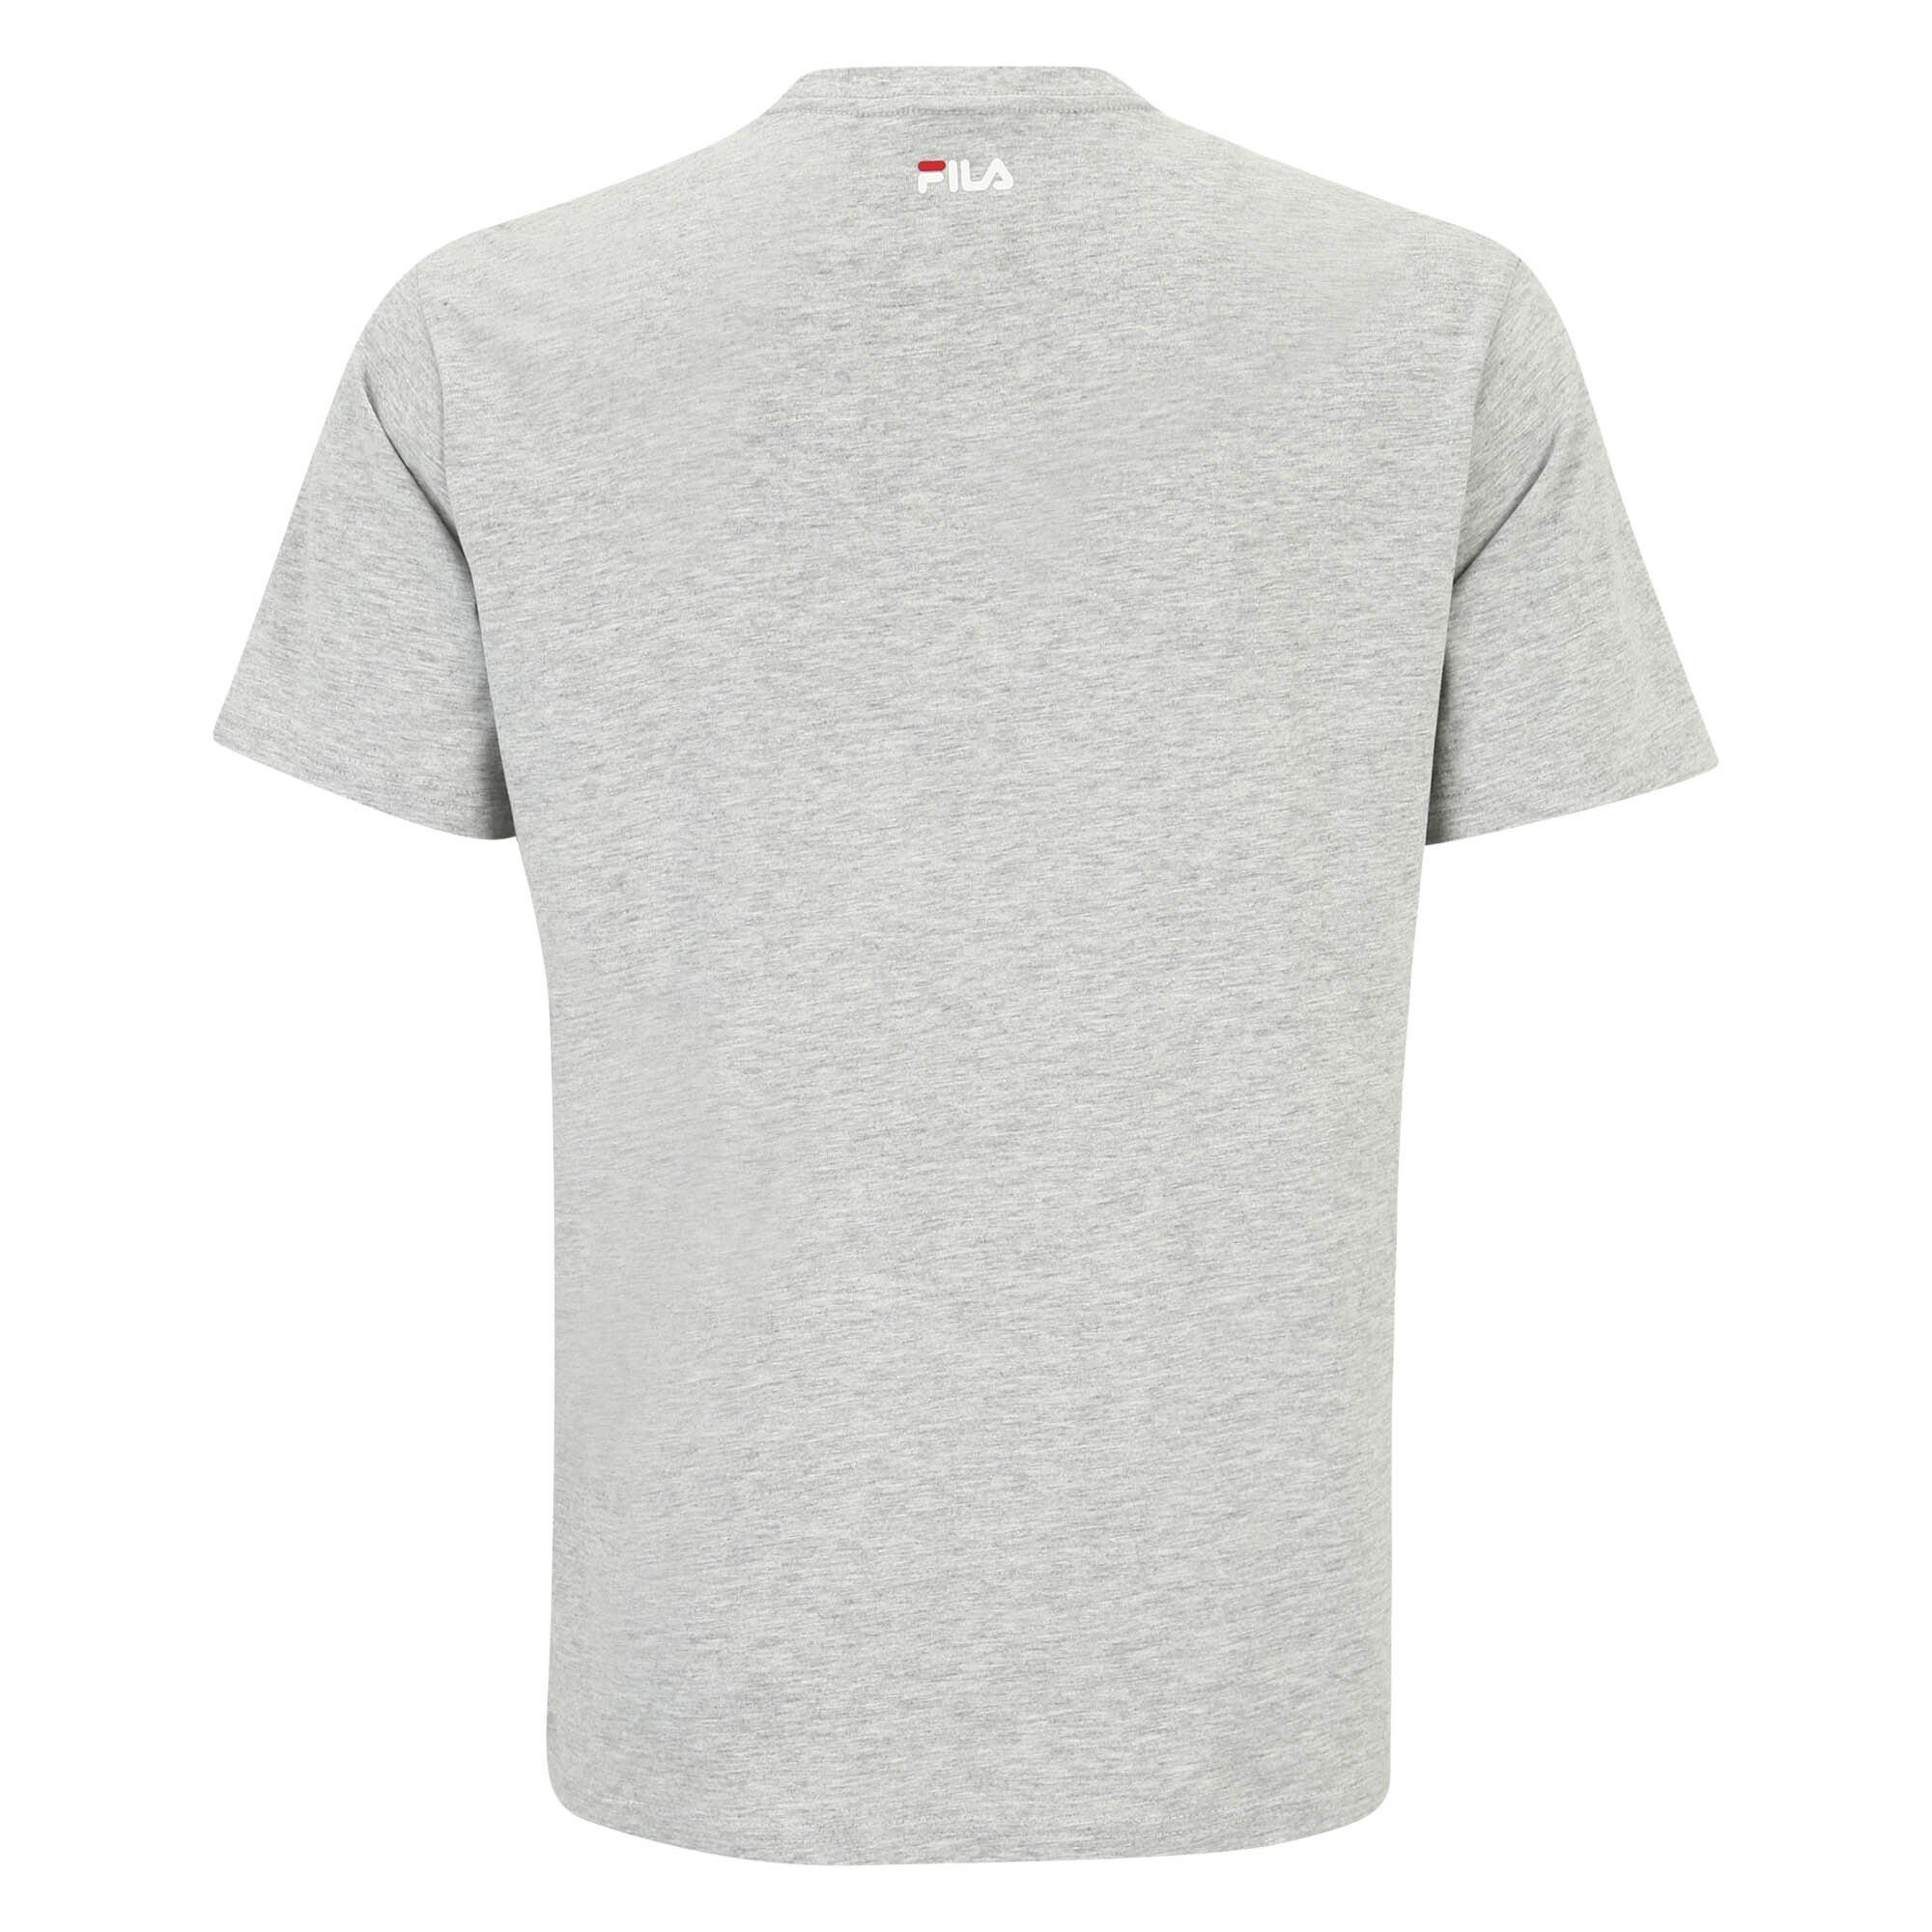 BELLANO T-Shirt Unisex Fila - tee, Rundhals, Kurzarm Grau T-Shirt